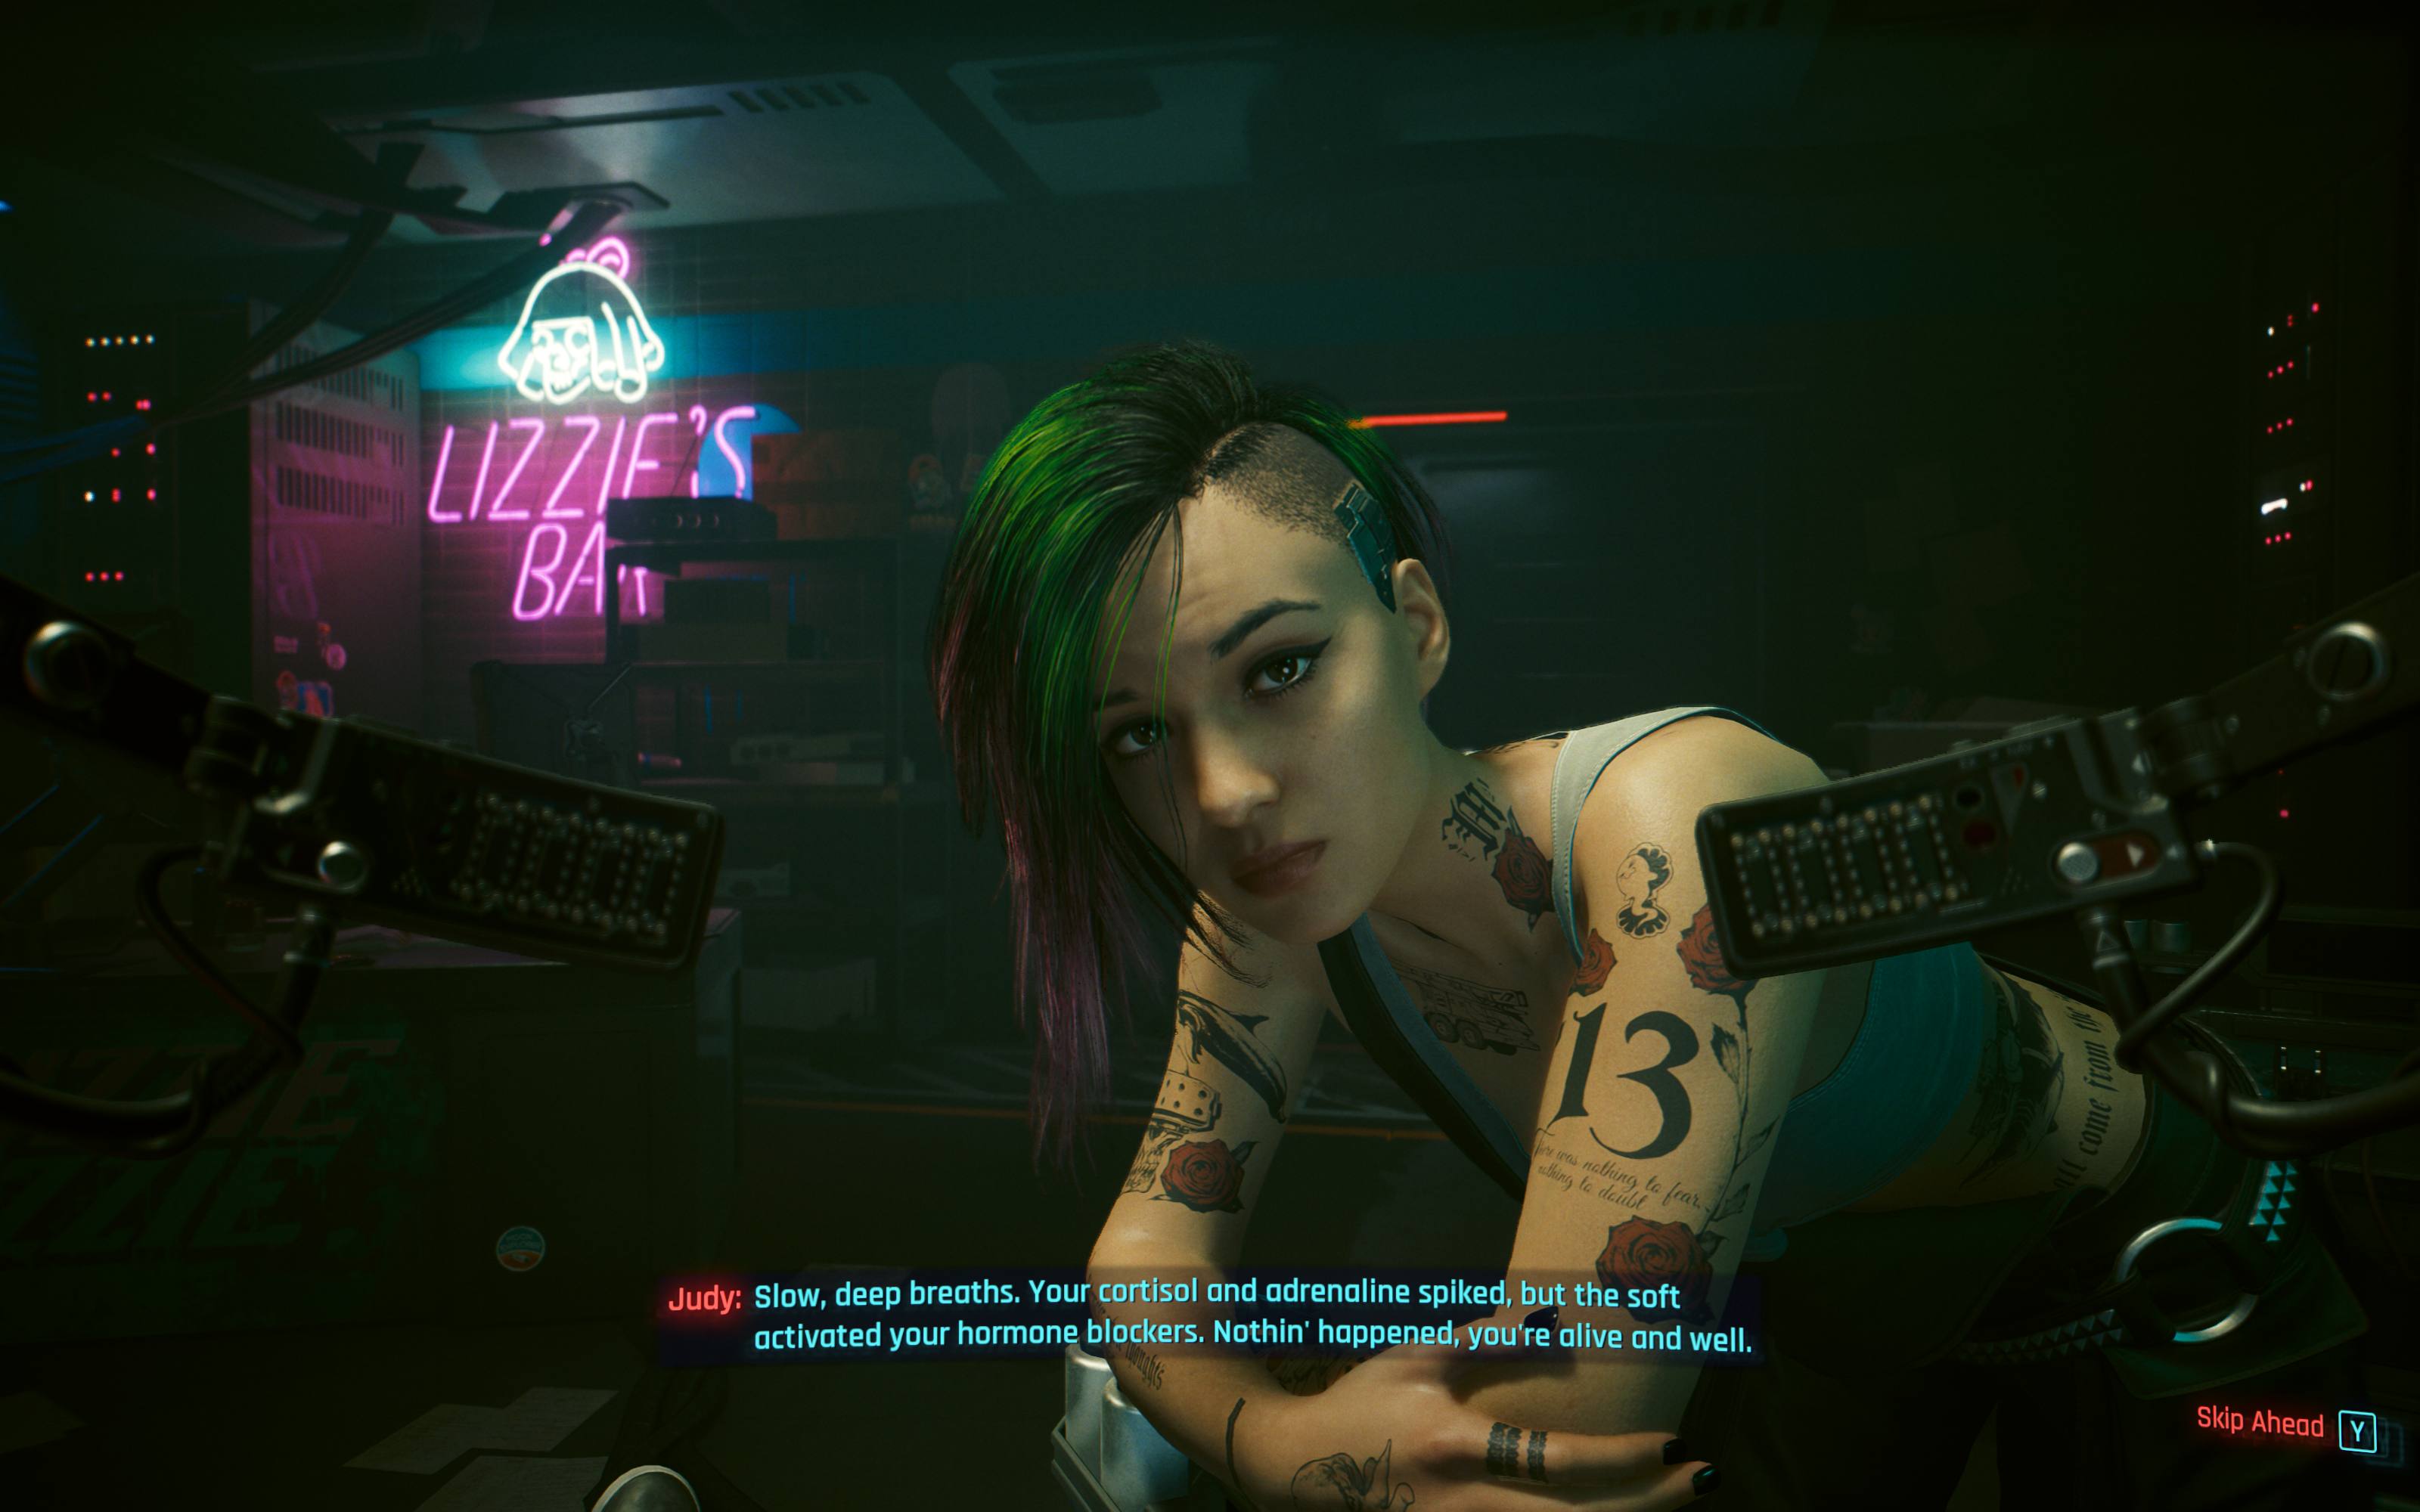 A screenshot of a virtual tattooed woman from the game "Cyberpunk 2077."